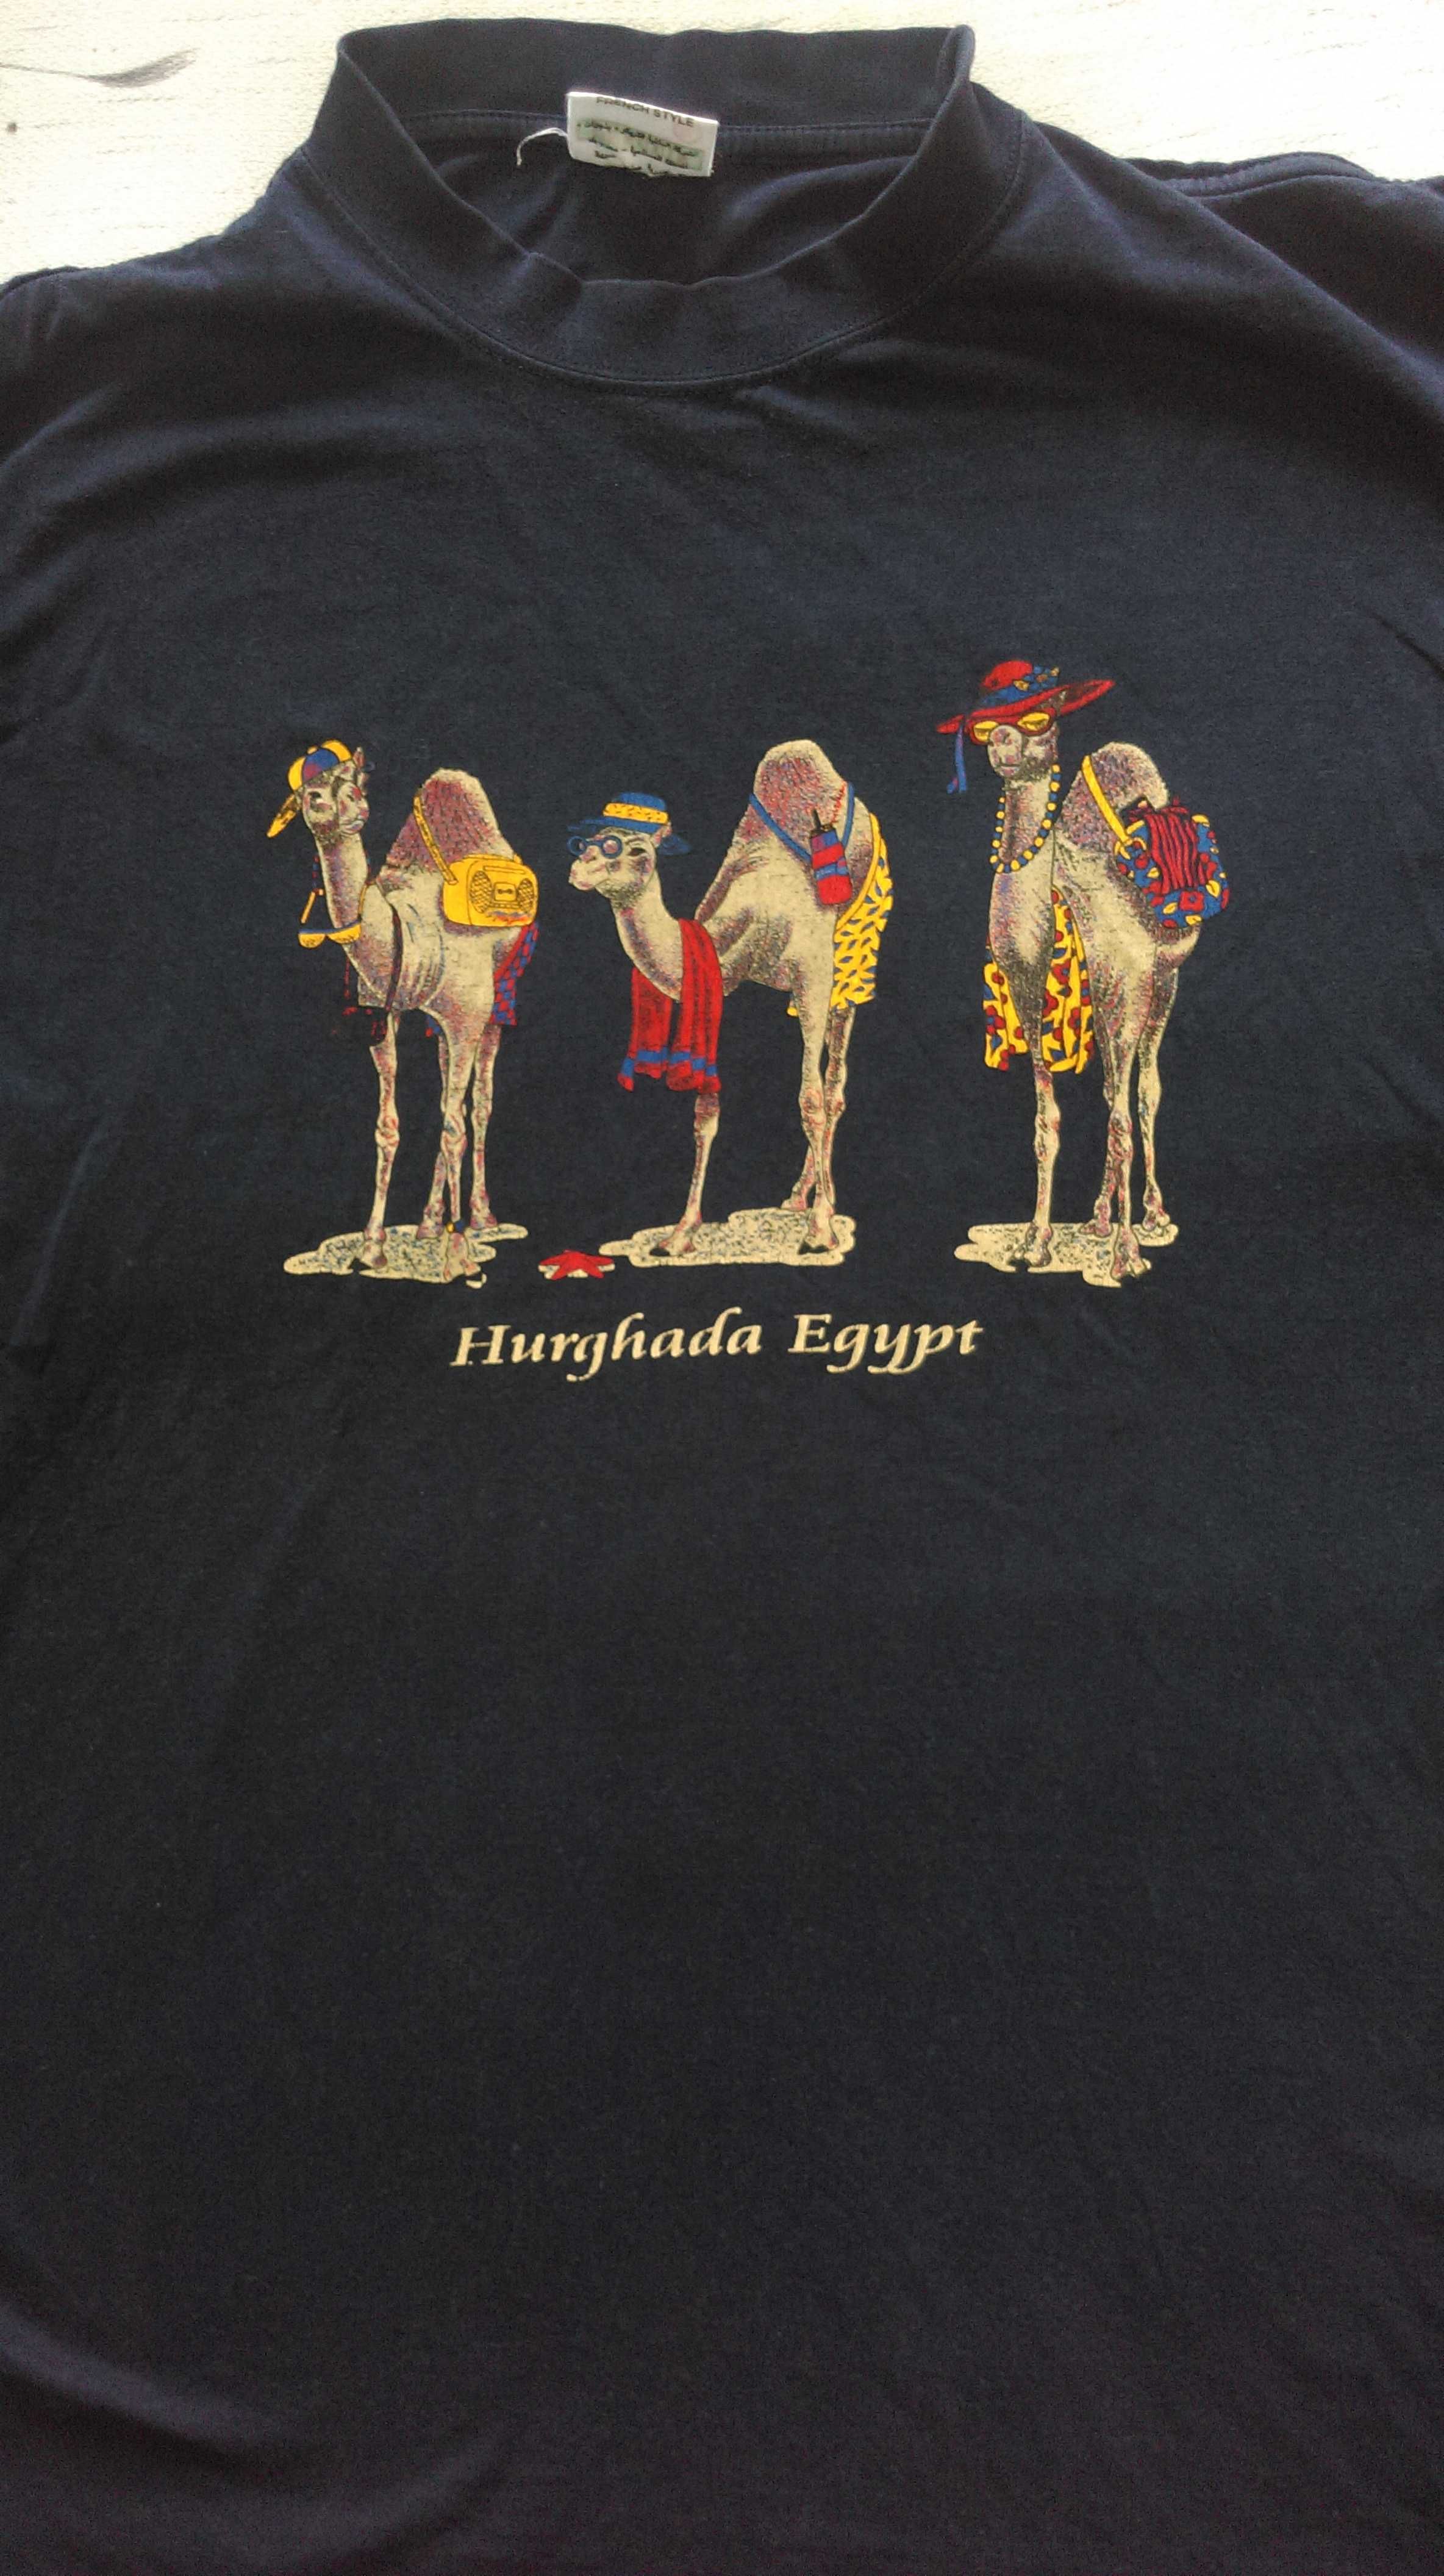 Хлопковая футболка на память о Египте.Hurghada Egypt. Размер: 50.